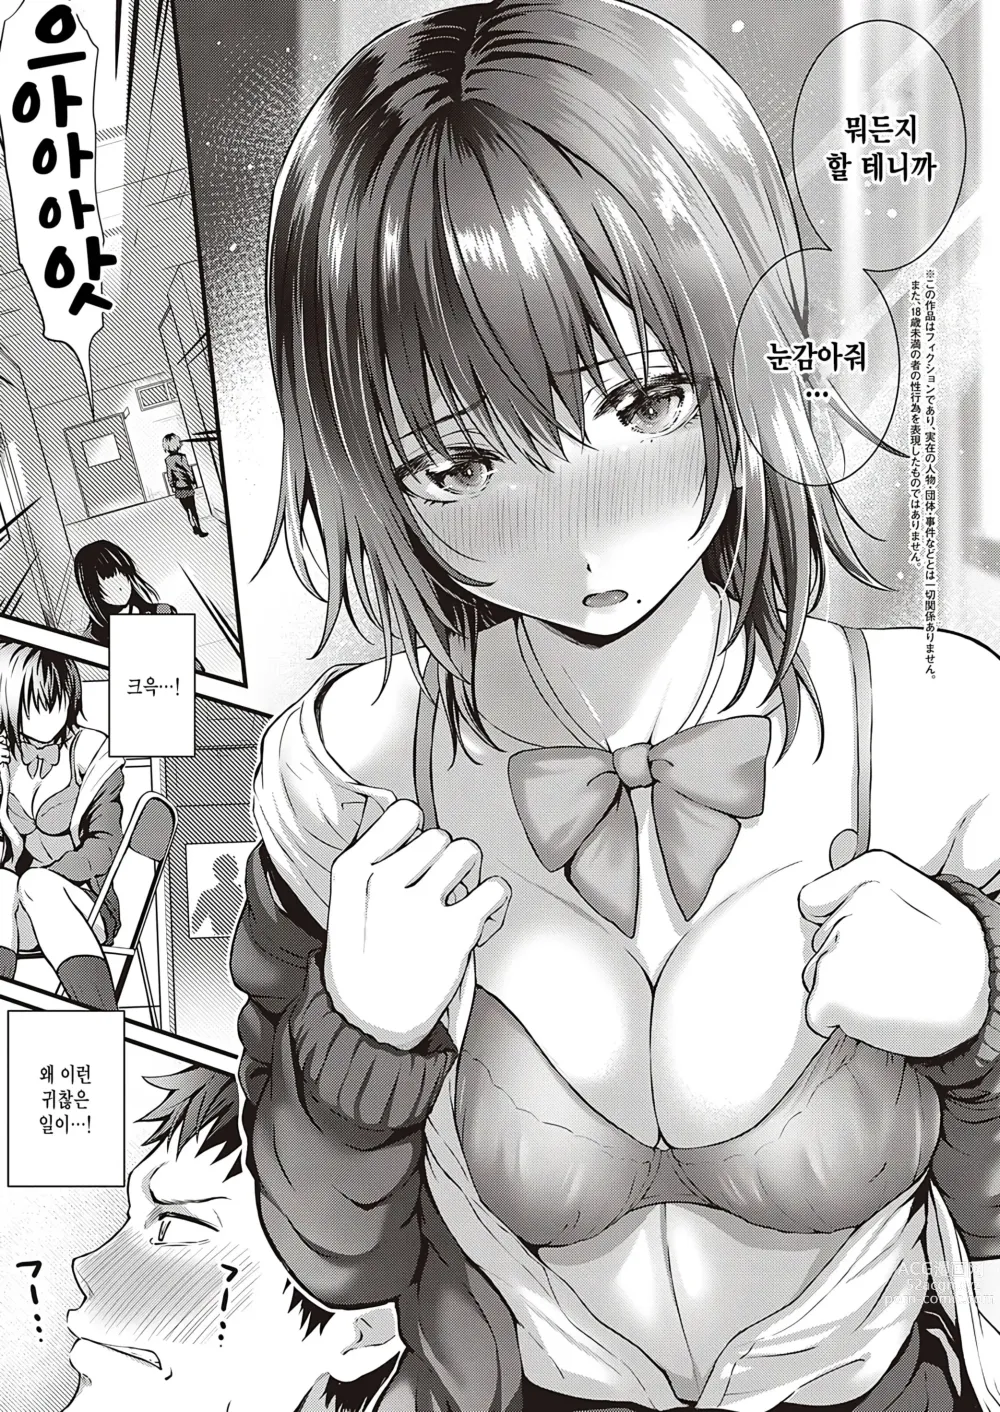 Page 3 of manga Bad apple...?